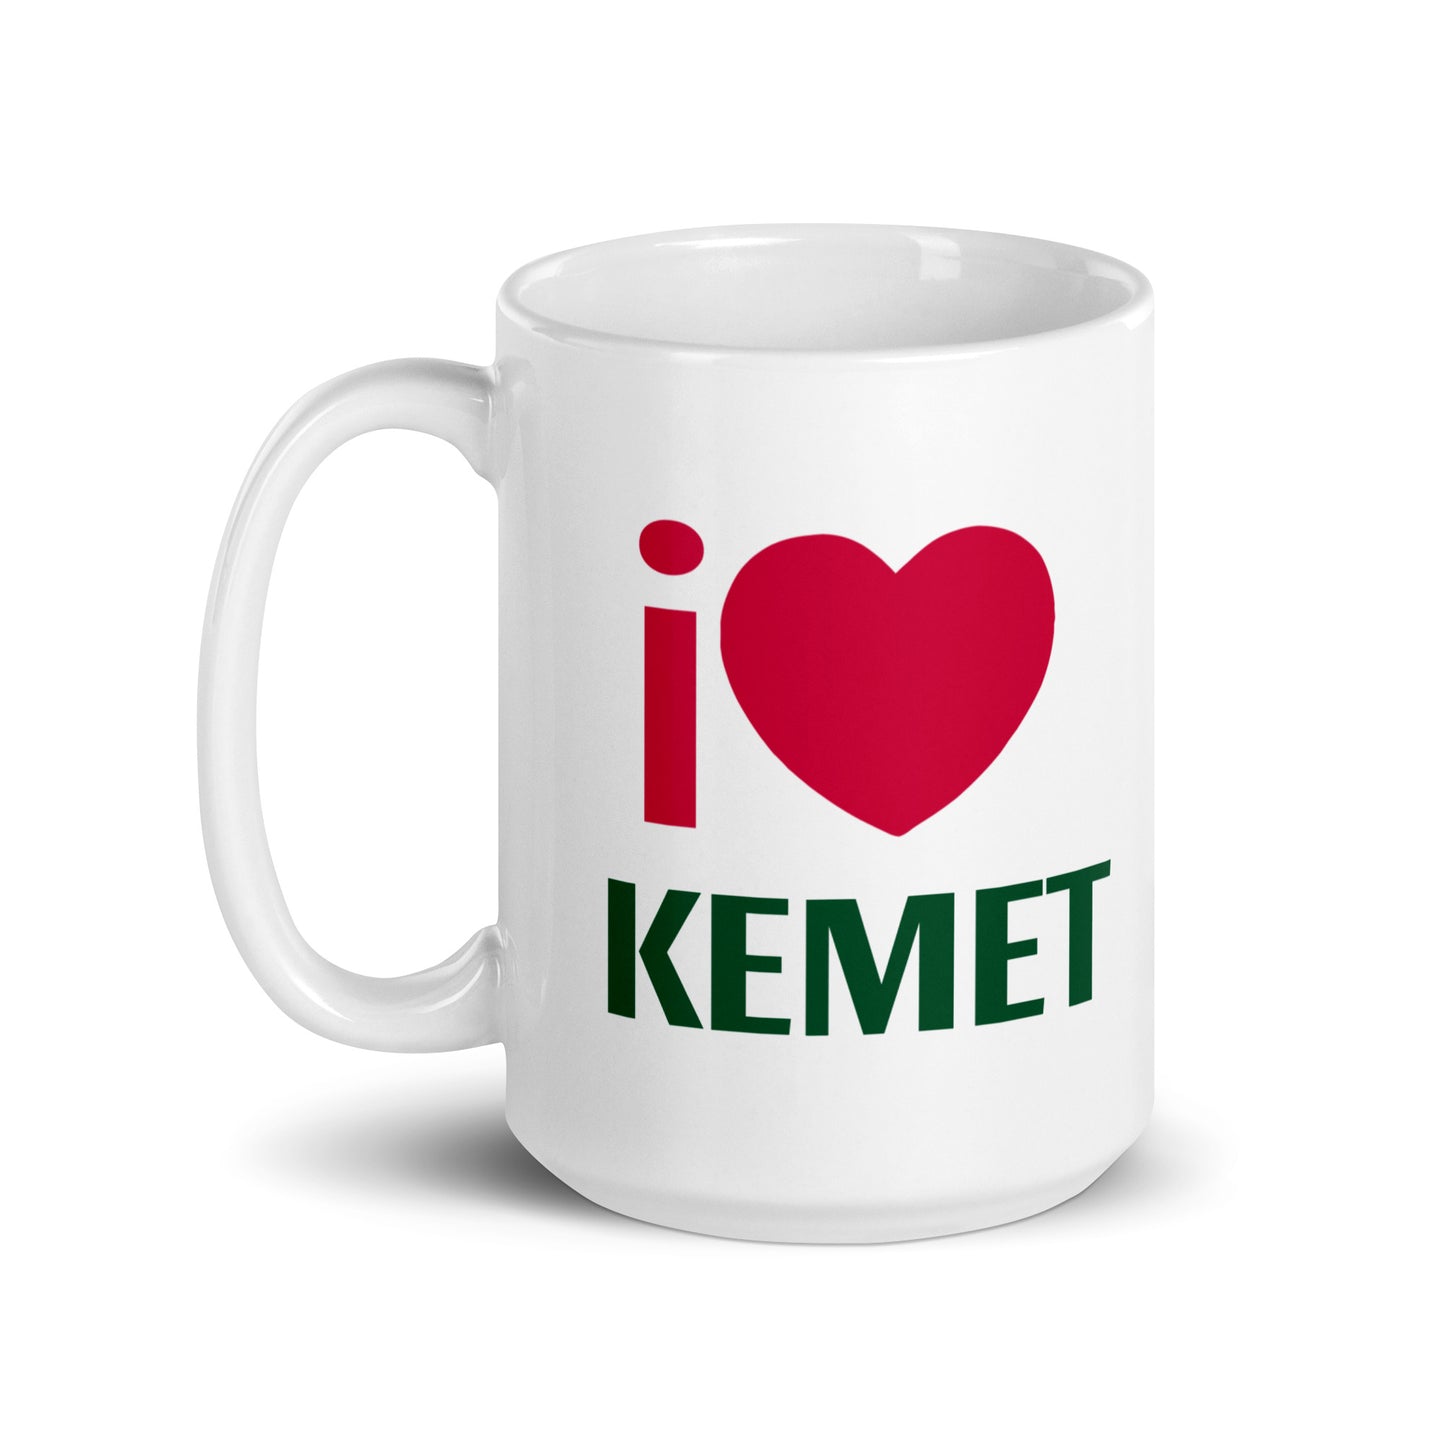 i LOVE KEMET White glossy mug